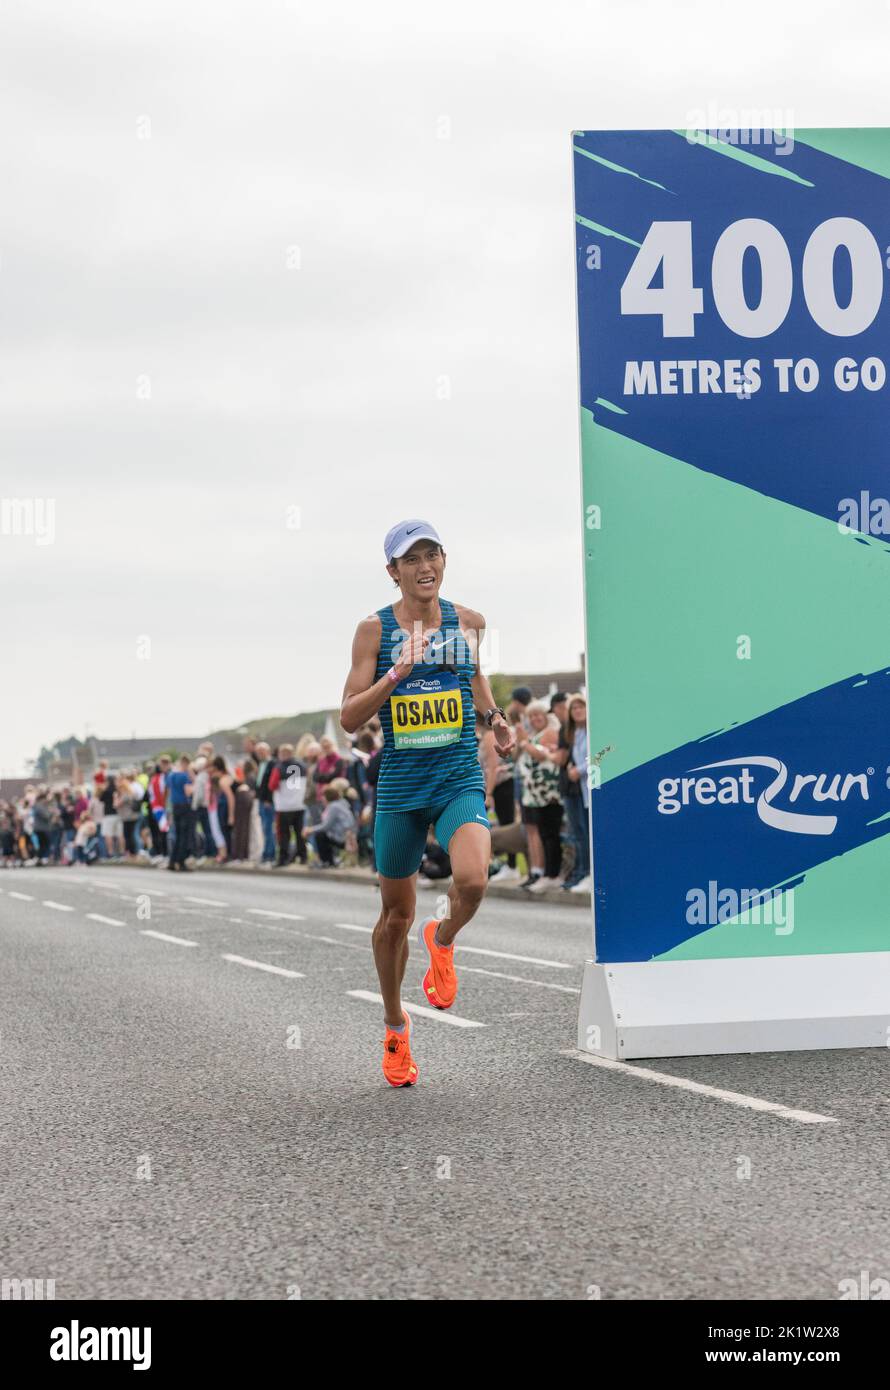 Suguro Osako long-distance runner finishing 4th in the 2022 Great North Run half marathon. Stock Photo